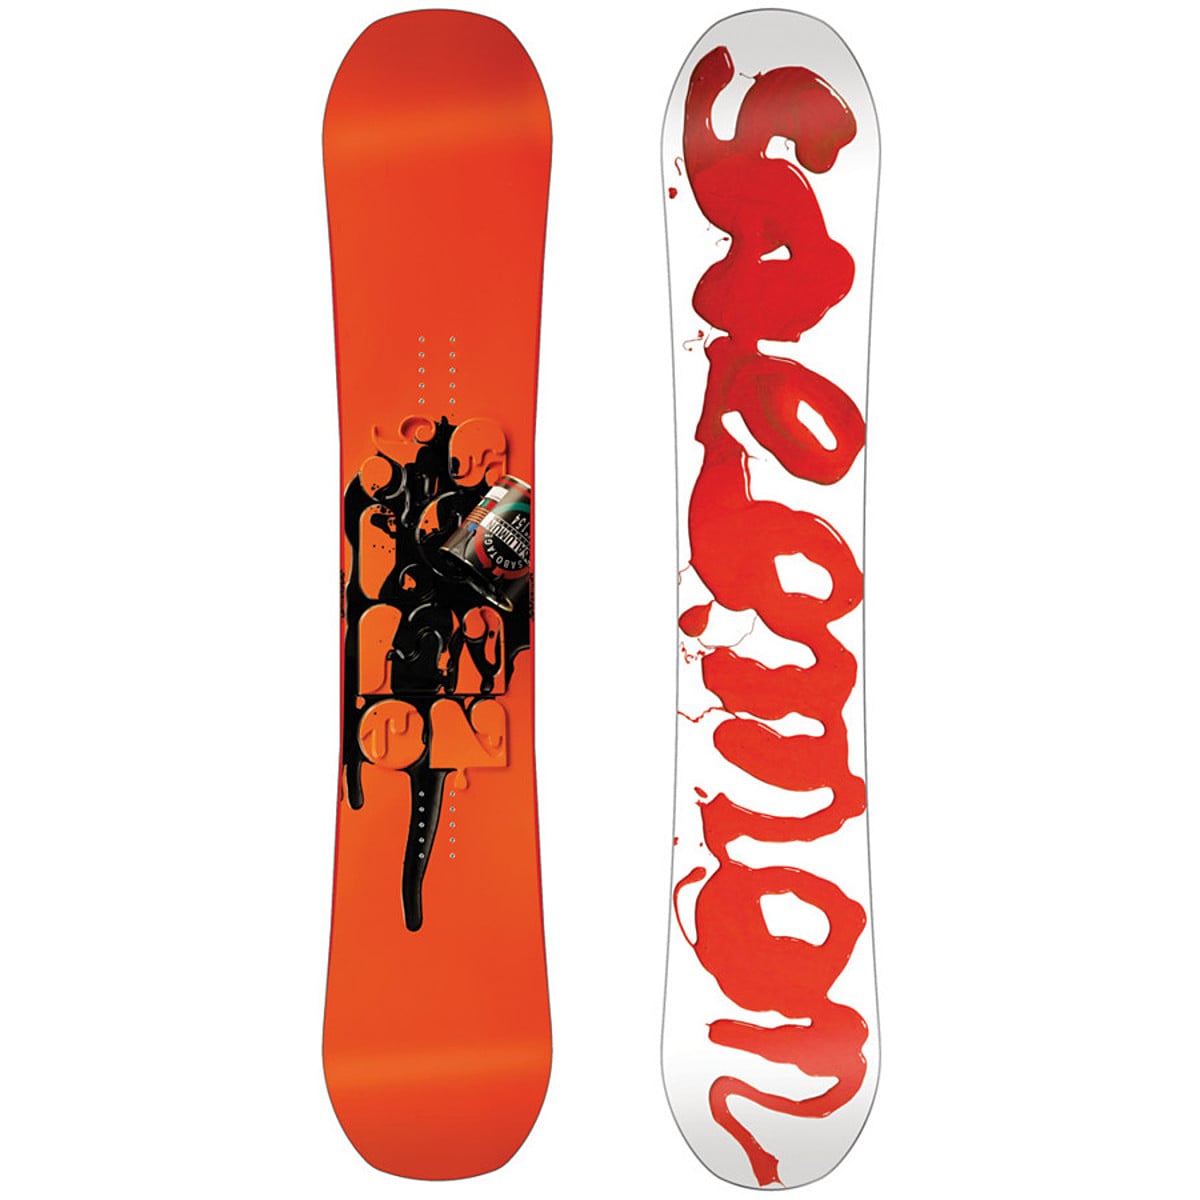 Oraal beton Sluit een verzekering af Salomon Snowboards Sabotage Snowboard - Snowboard